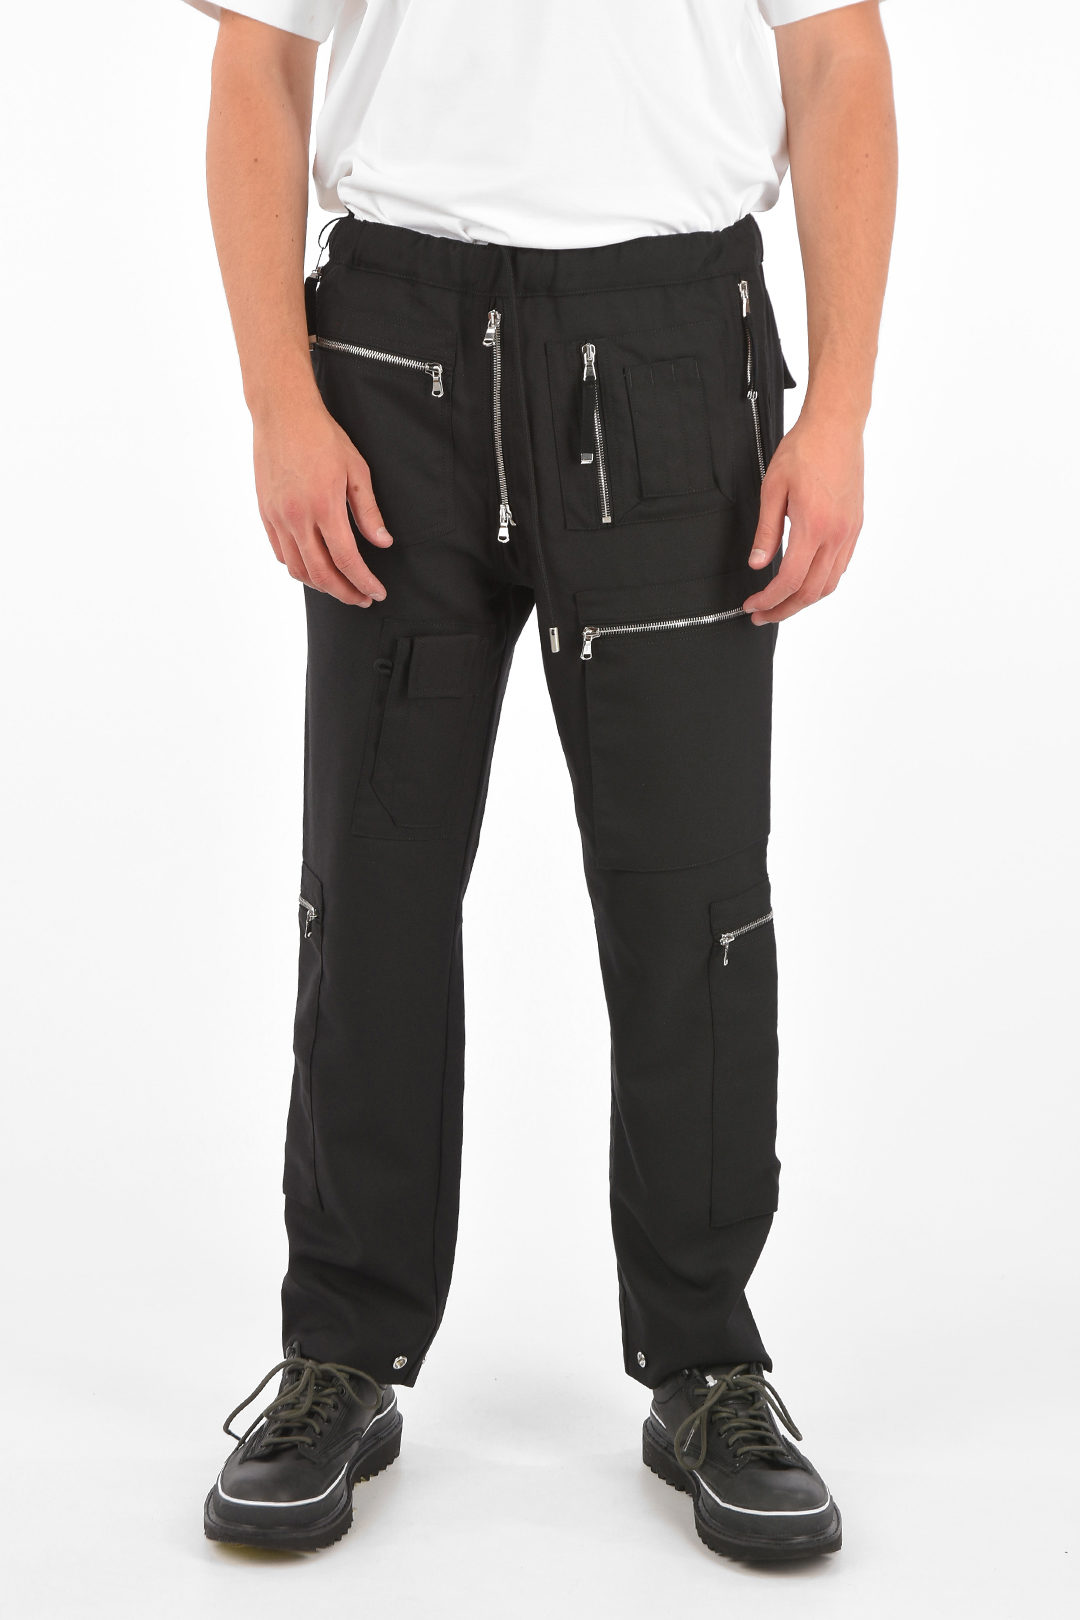 Vega Double Pocket Cargo Pants (Dark Taupe) | The Tinsel Rack